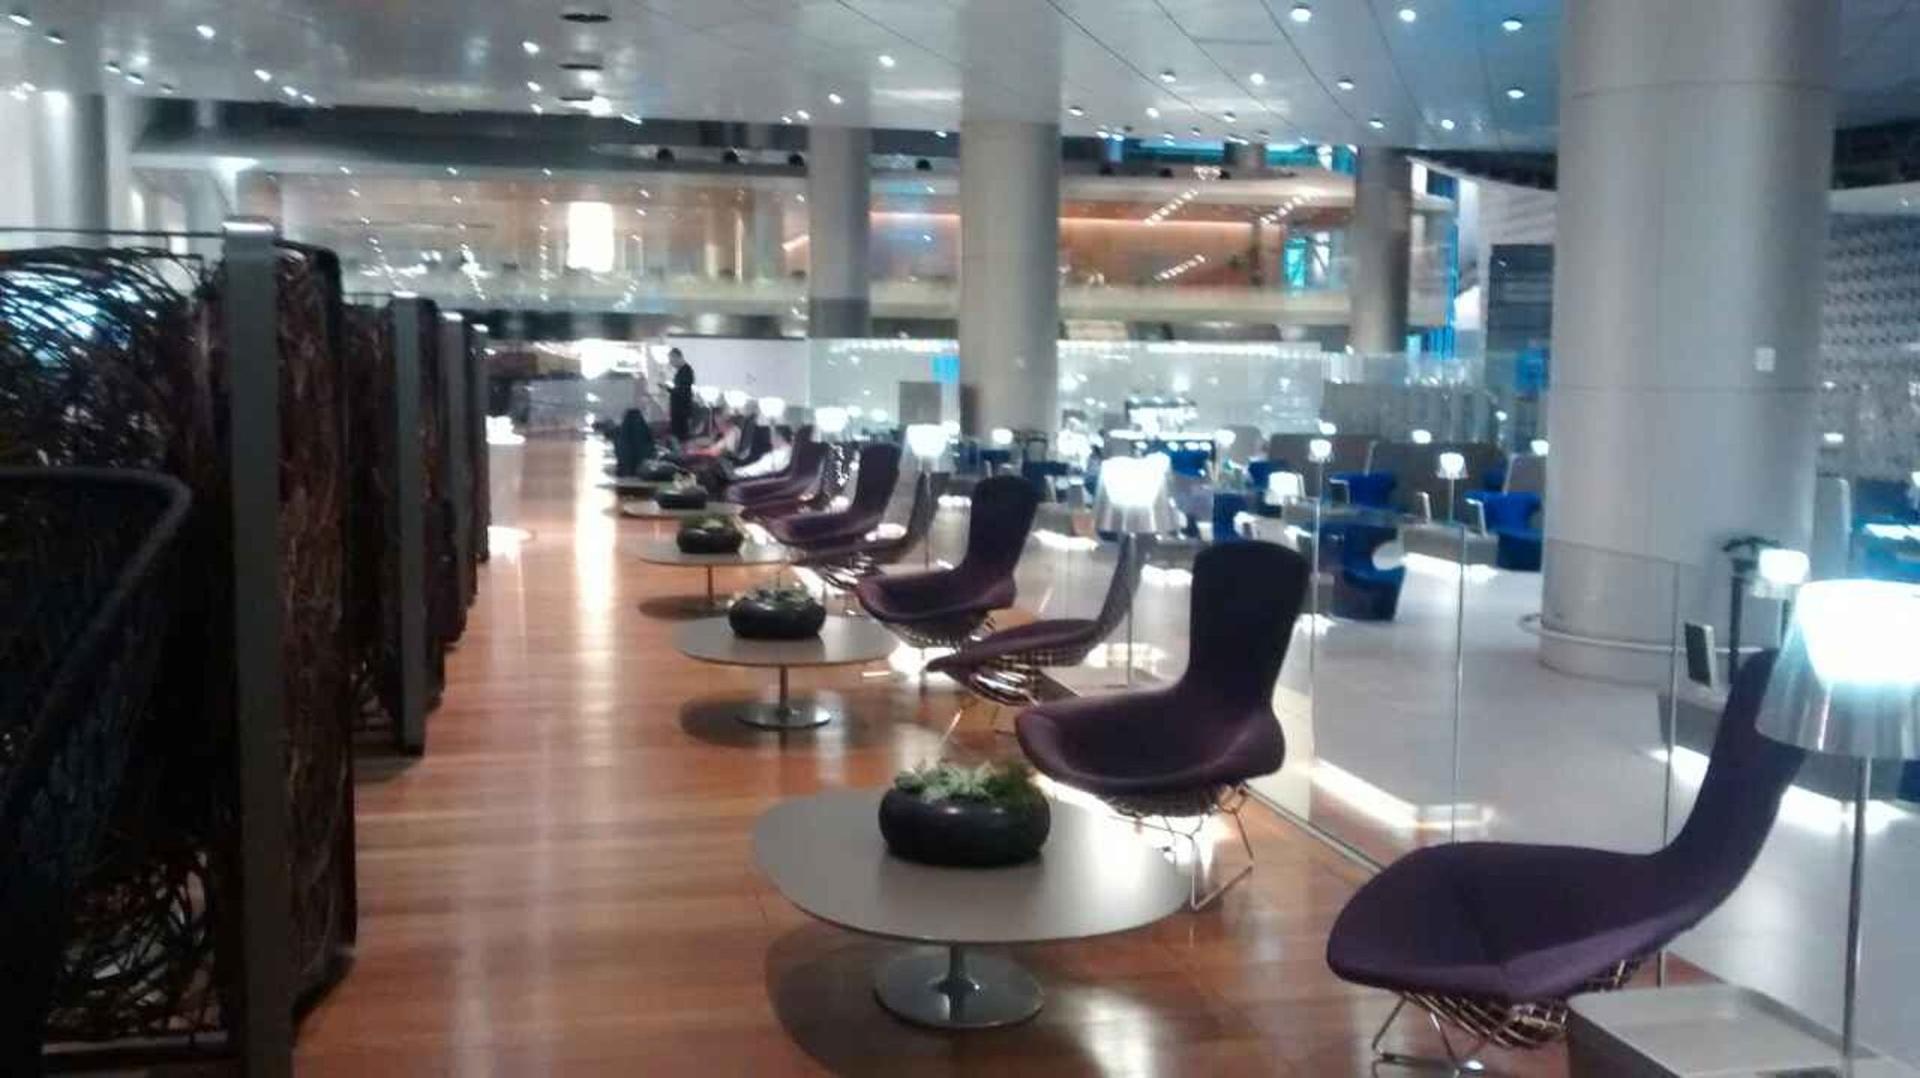 Qatar Airways Al Mourjan Business Class Lounge image 14 of 100